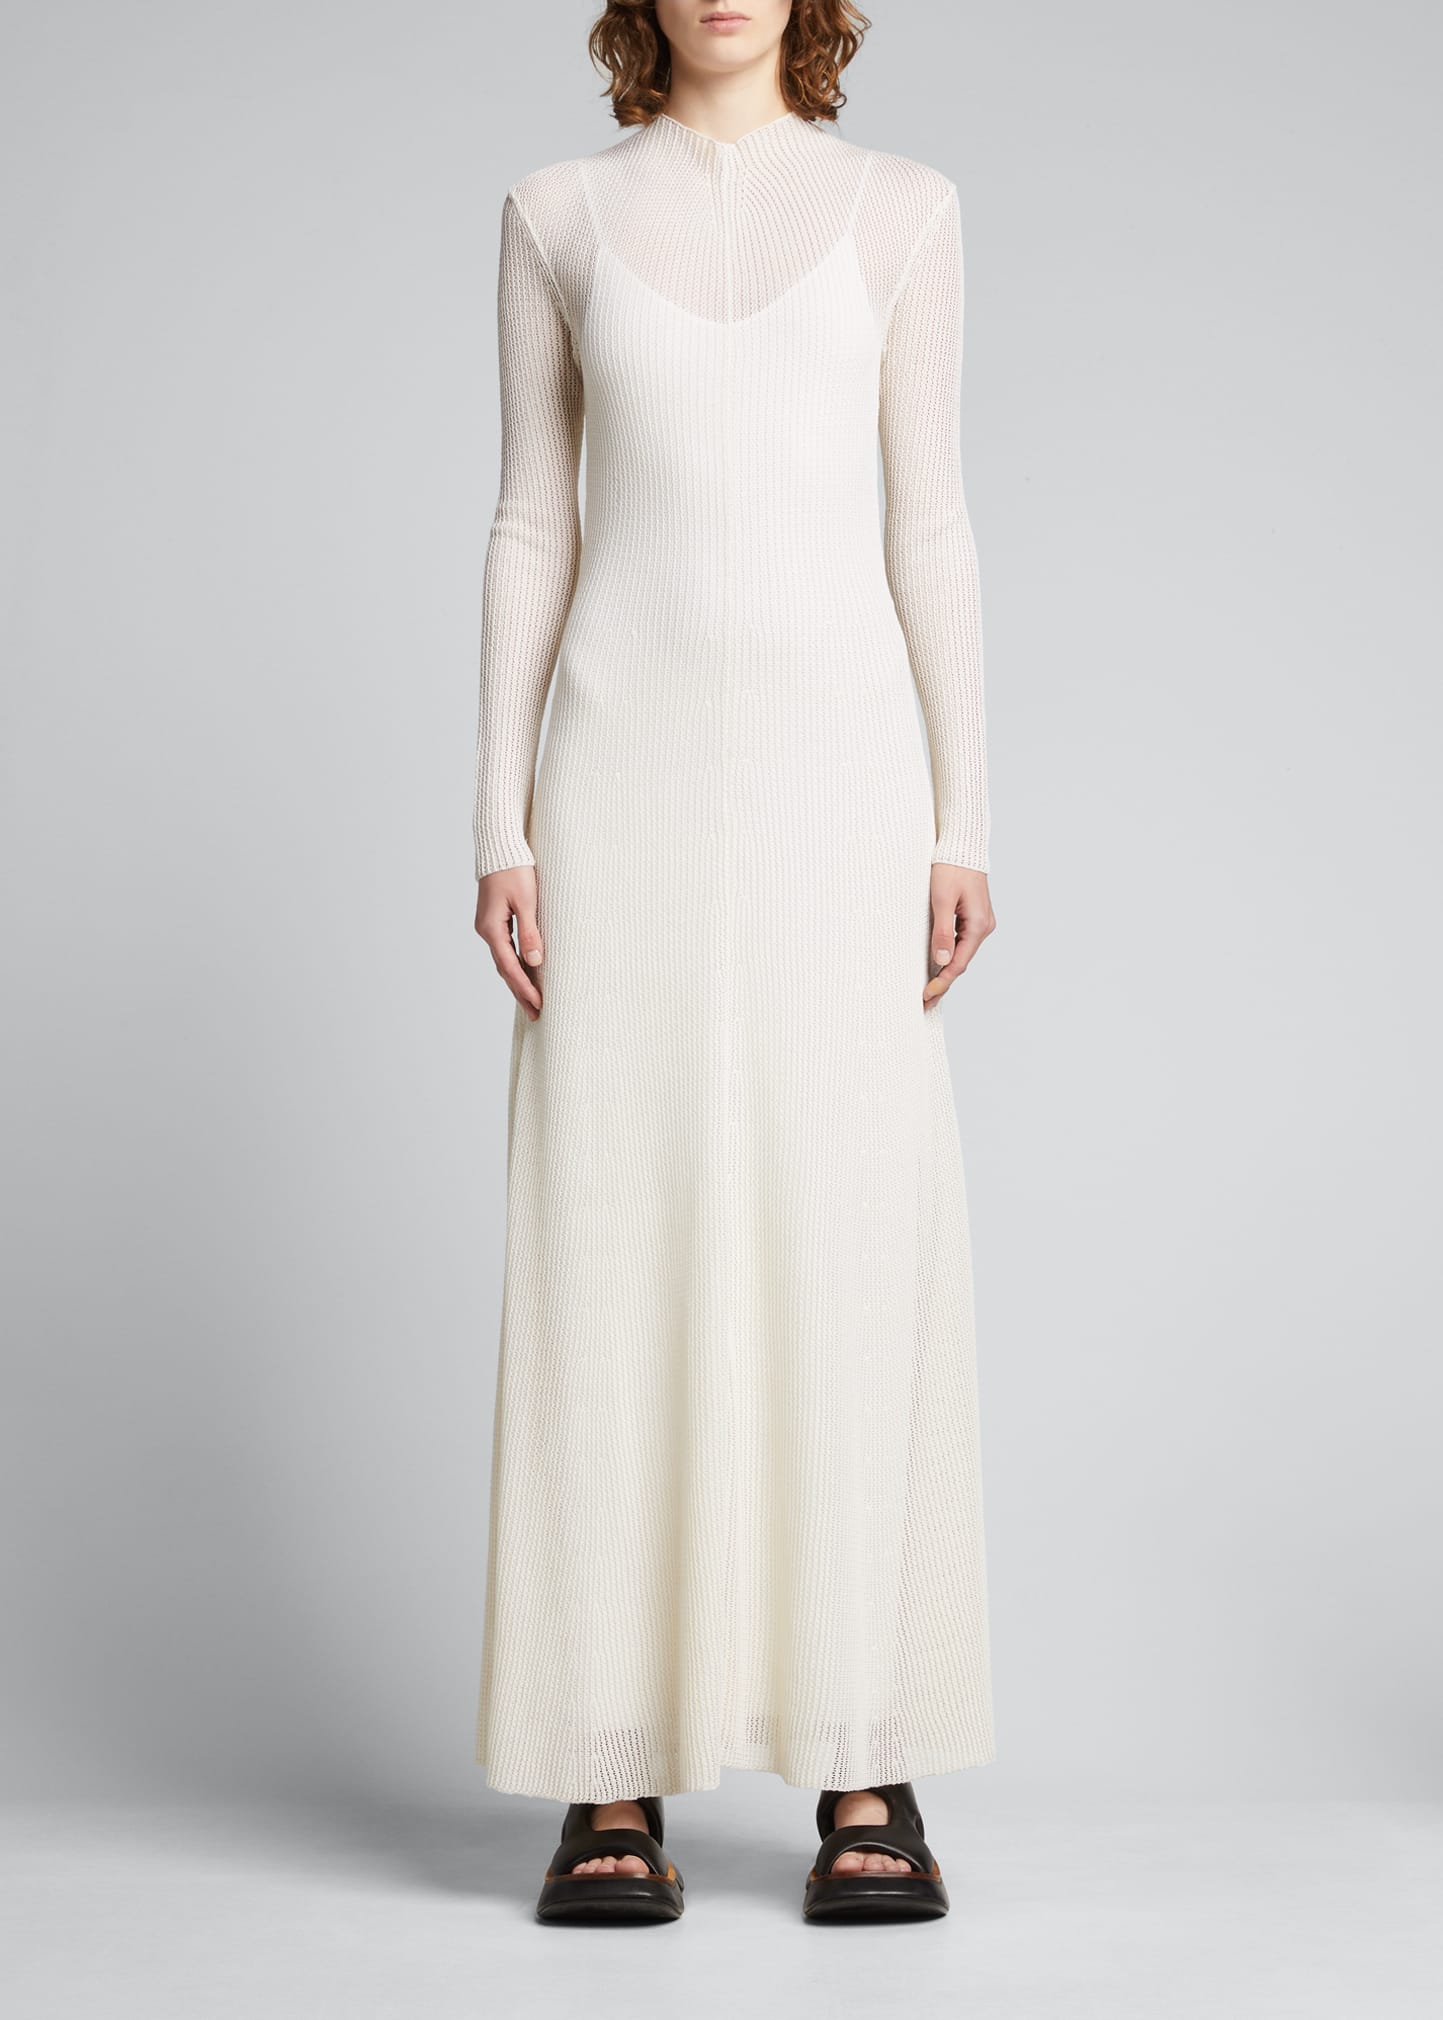 Proenza Schouler Dress | bergdorfgoodman.com